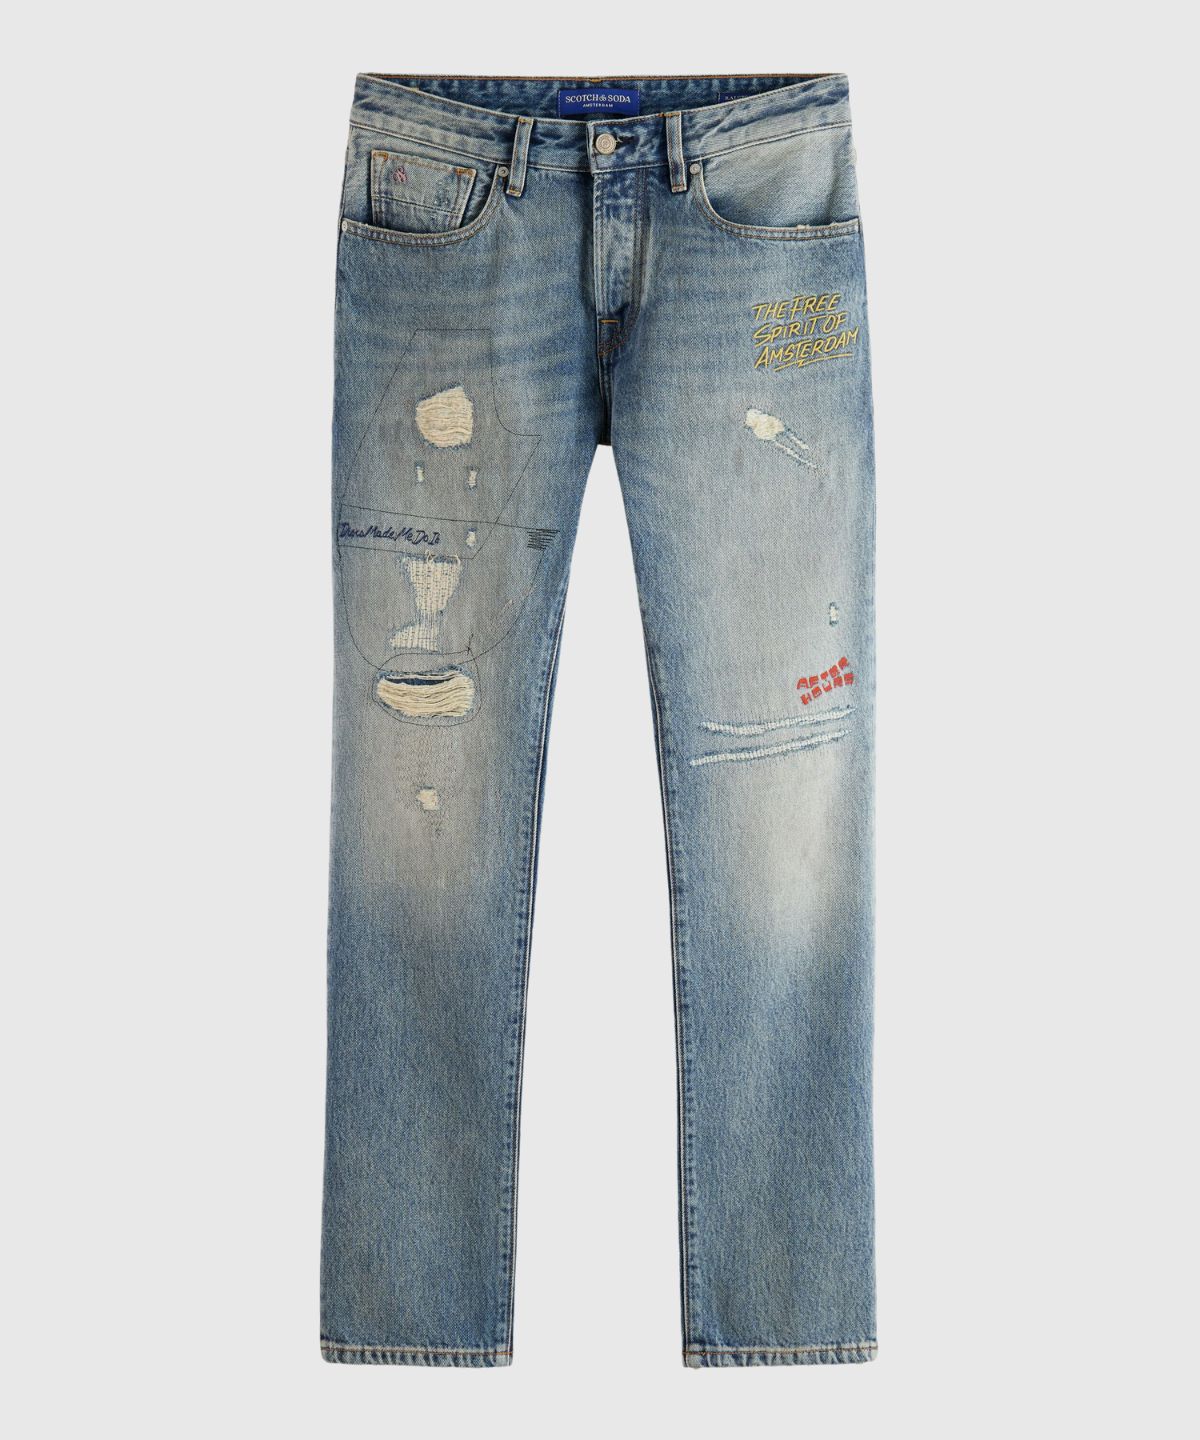 The Ralston premium regular slim jeans – Headline Act